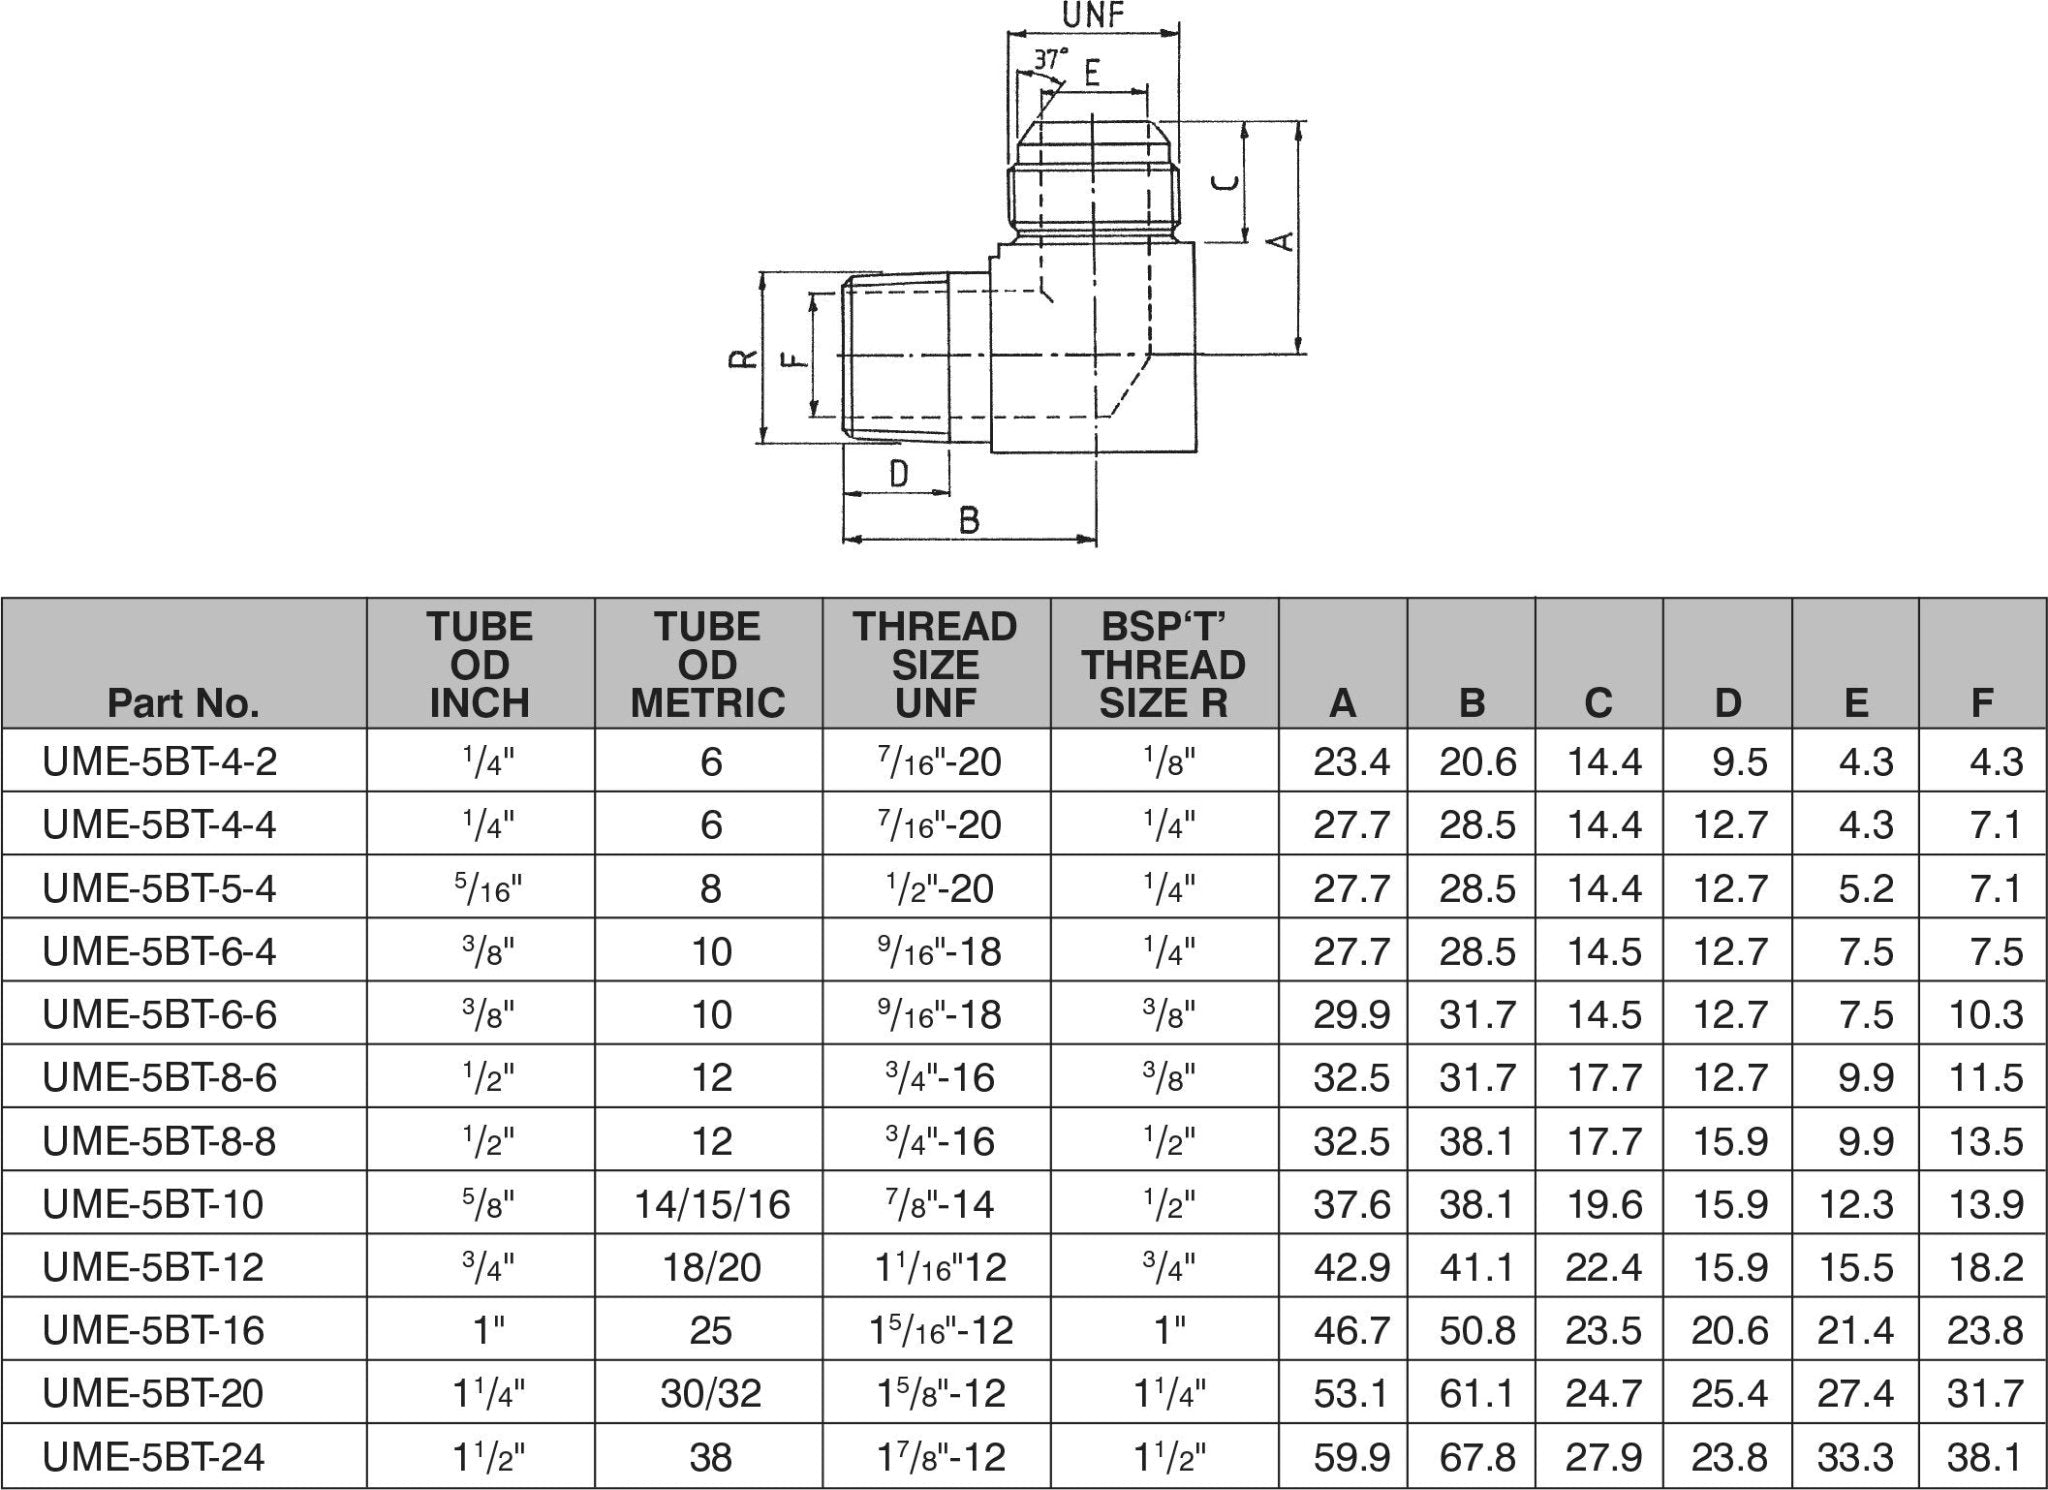 1.5/16"-12 JIC x 1" BSPT MALE / MALE 90° ELBOW-UME-5BT-16